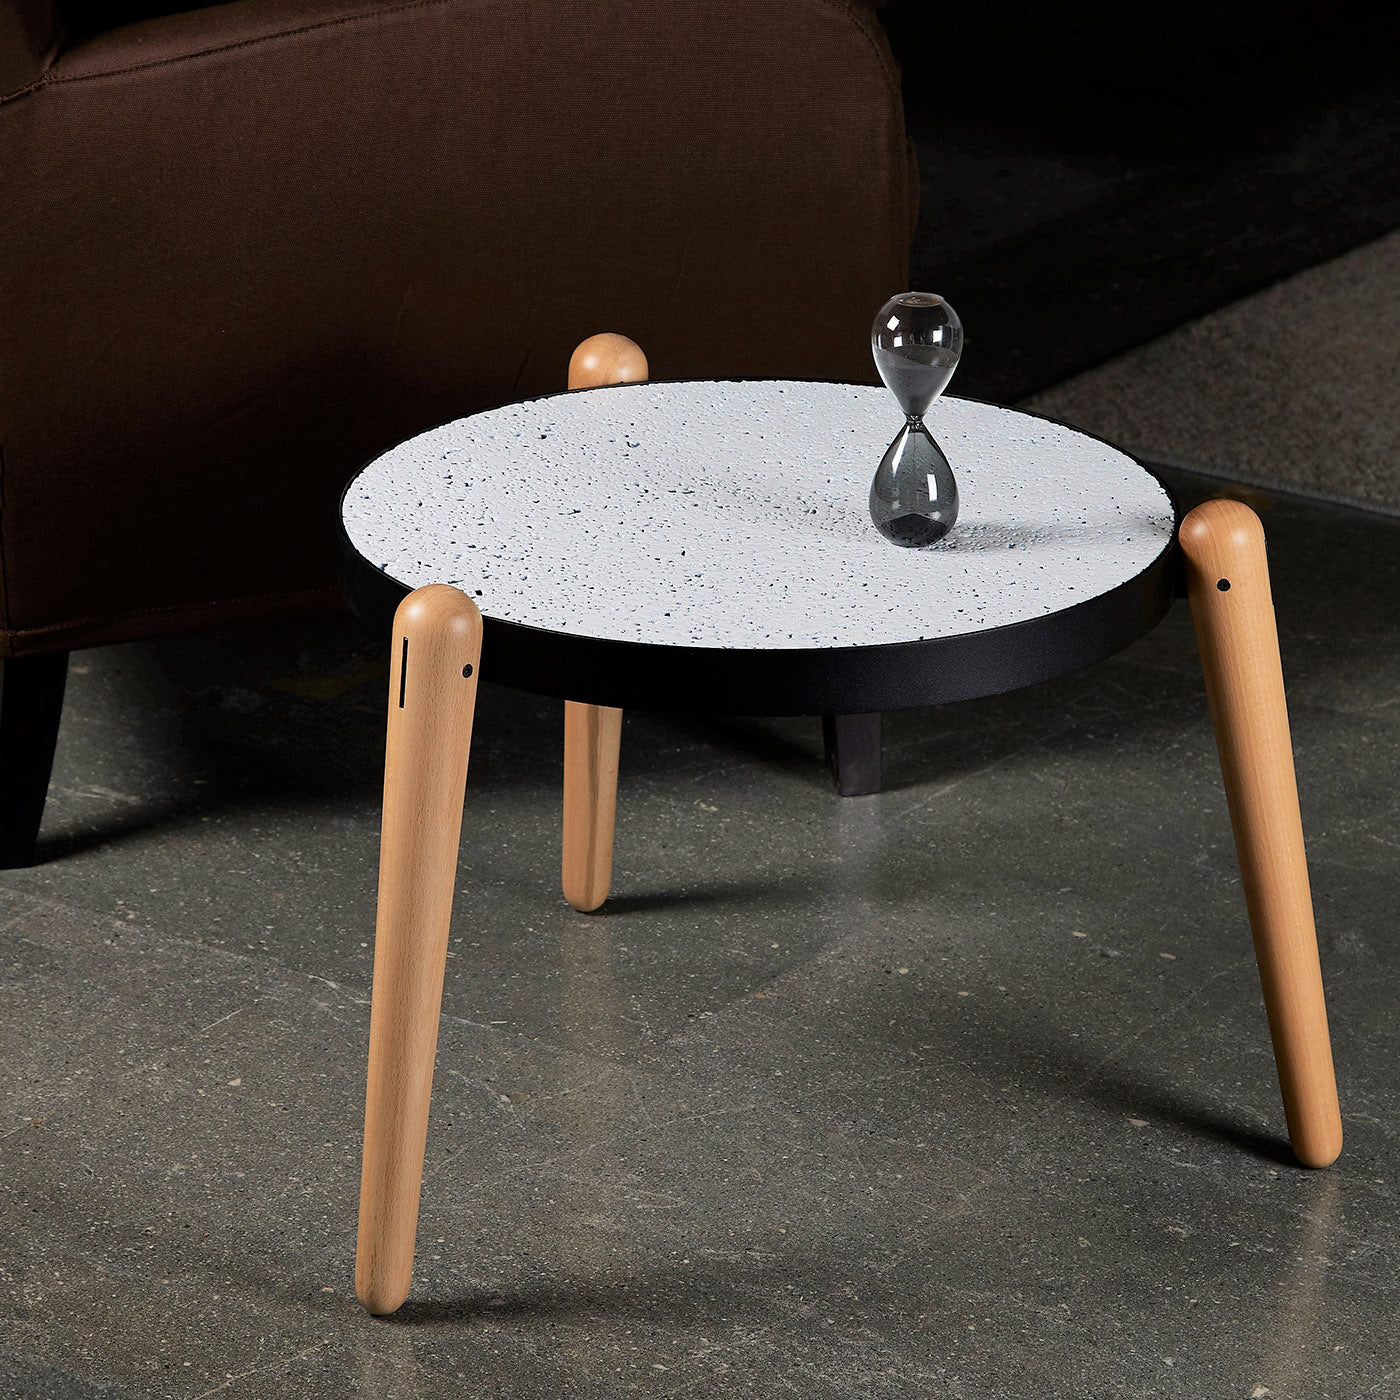 Tris Perciata Stone Round Coffee Table #1 by Luca Maci - Alternative view 2